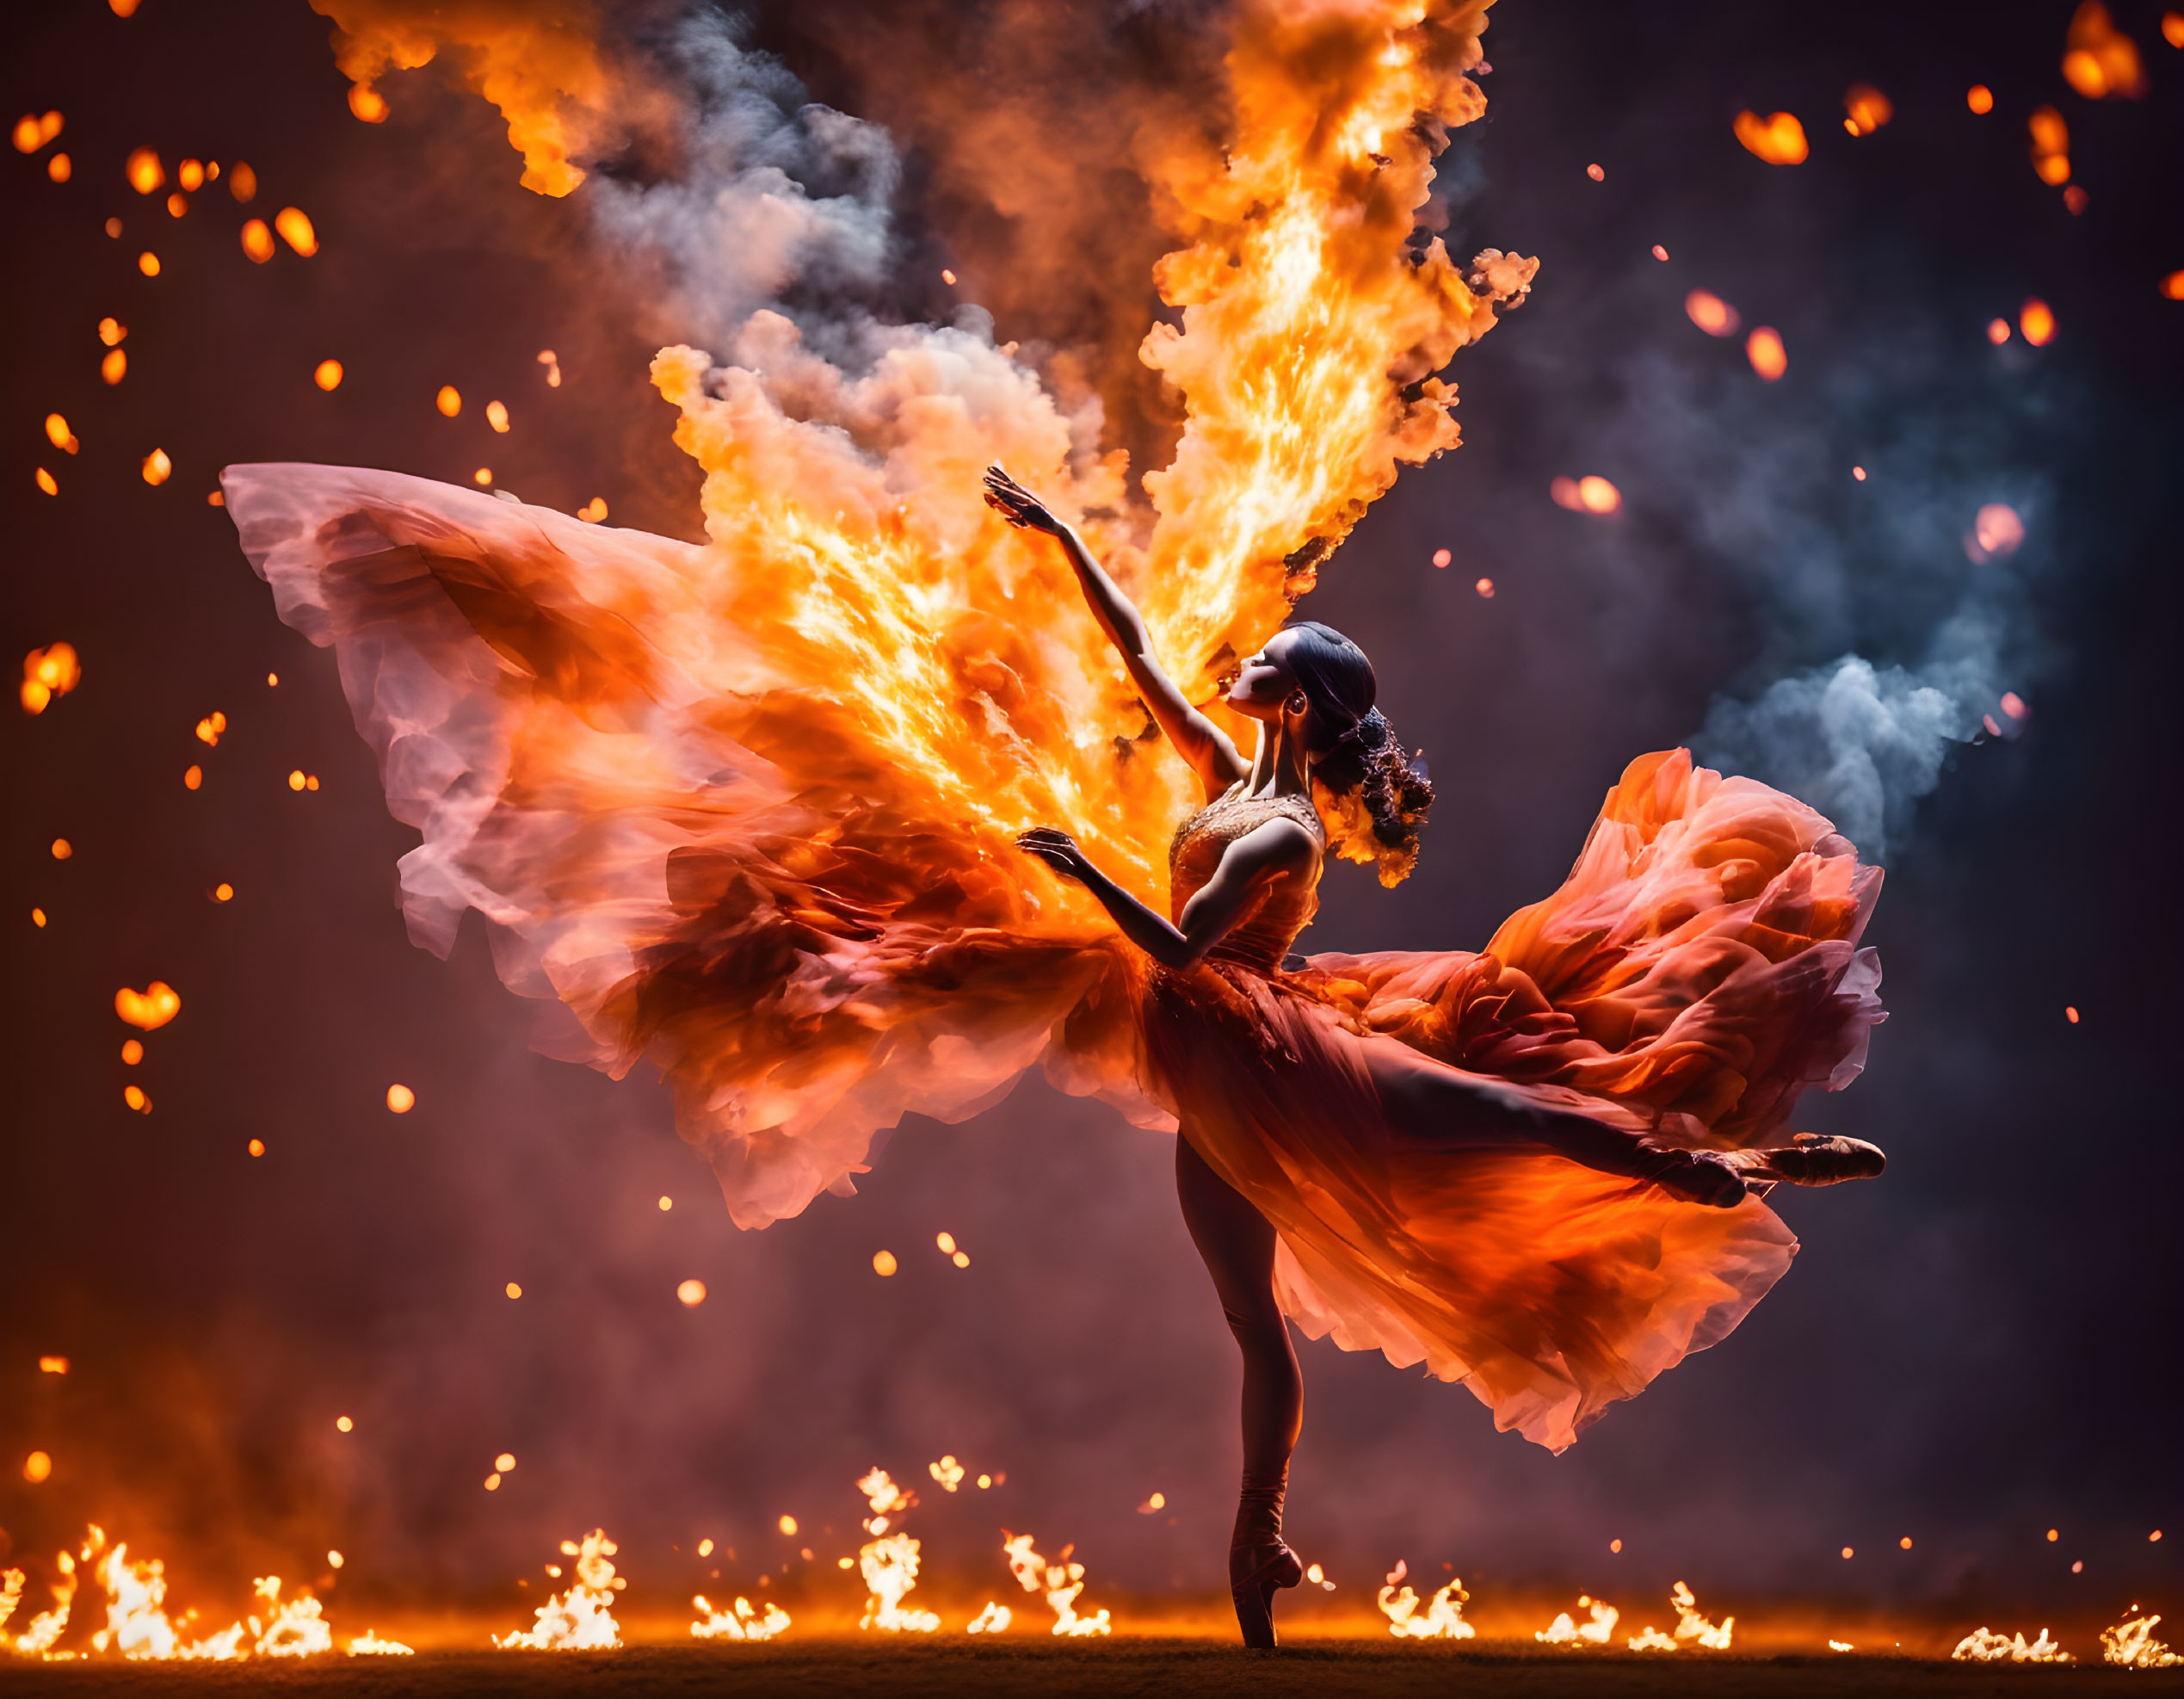 Dance on fire 